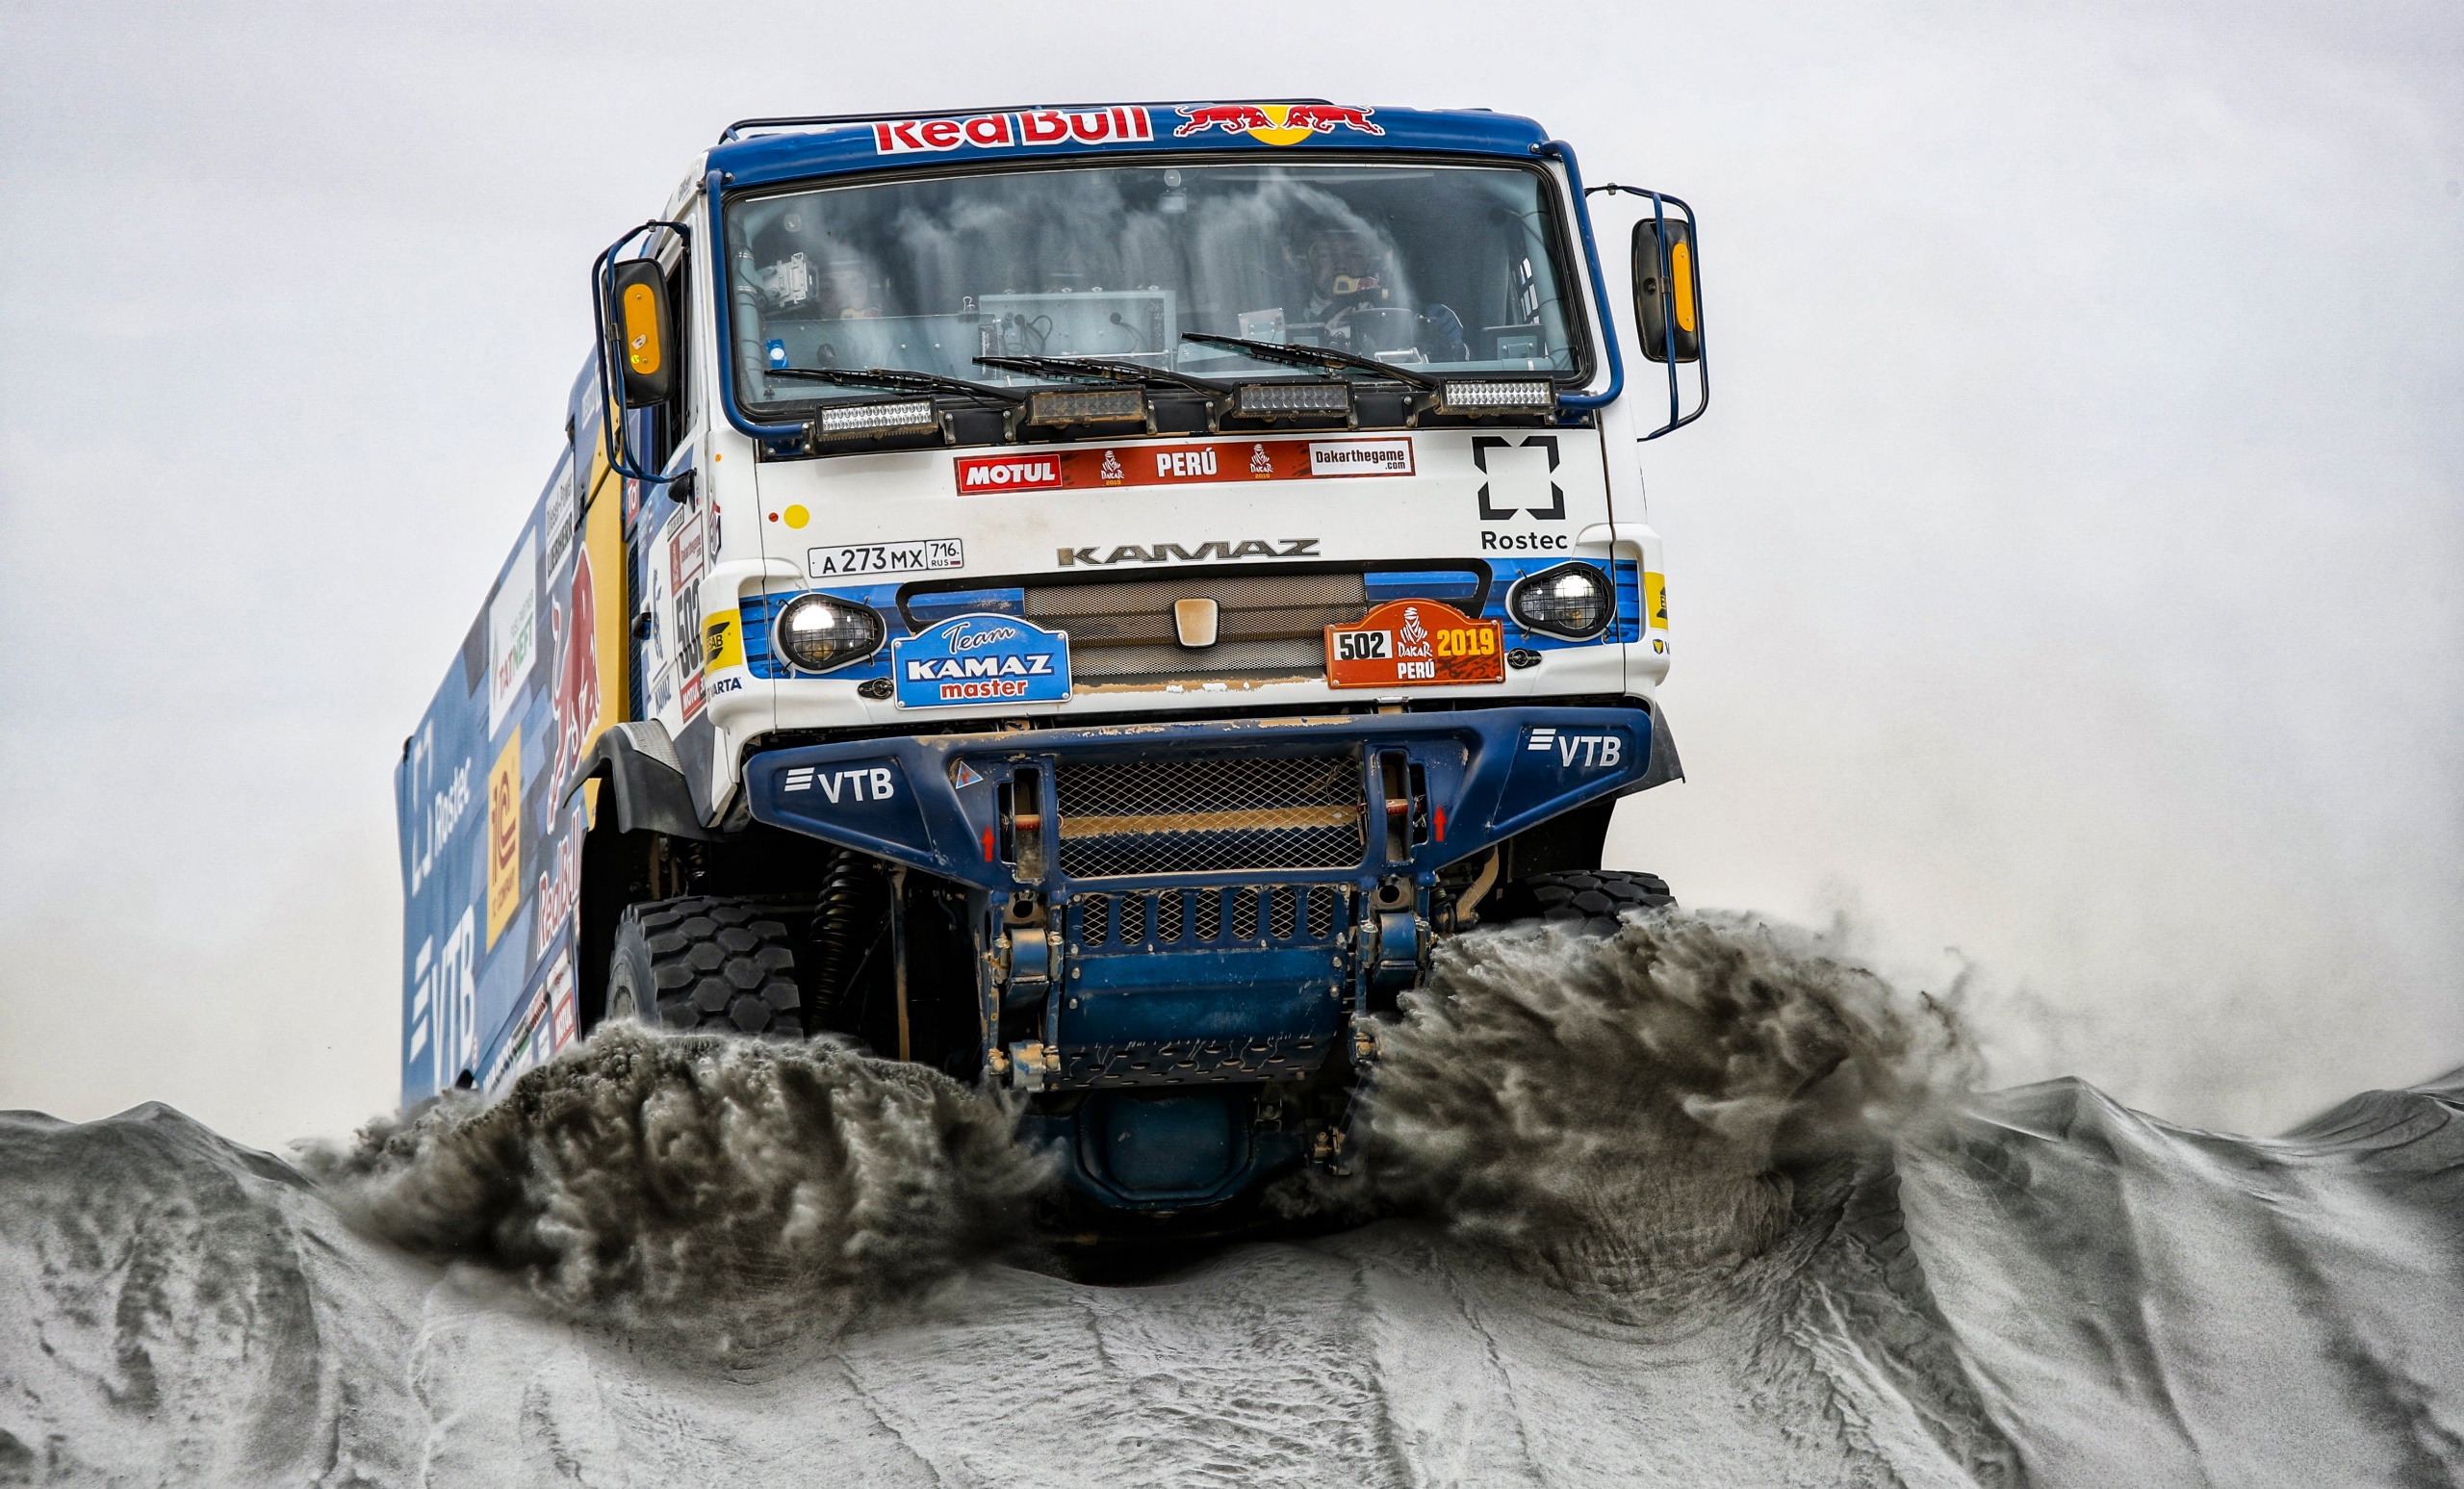 General 2560x1547 truck dirt Rally vehicle racing numbers Dakar Rally Kamaz motorsport Red Bull Racing 2019 (year) Blue Trucks Russian trucks frontal view Red Bull logo headlights